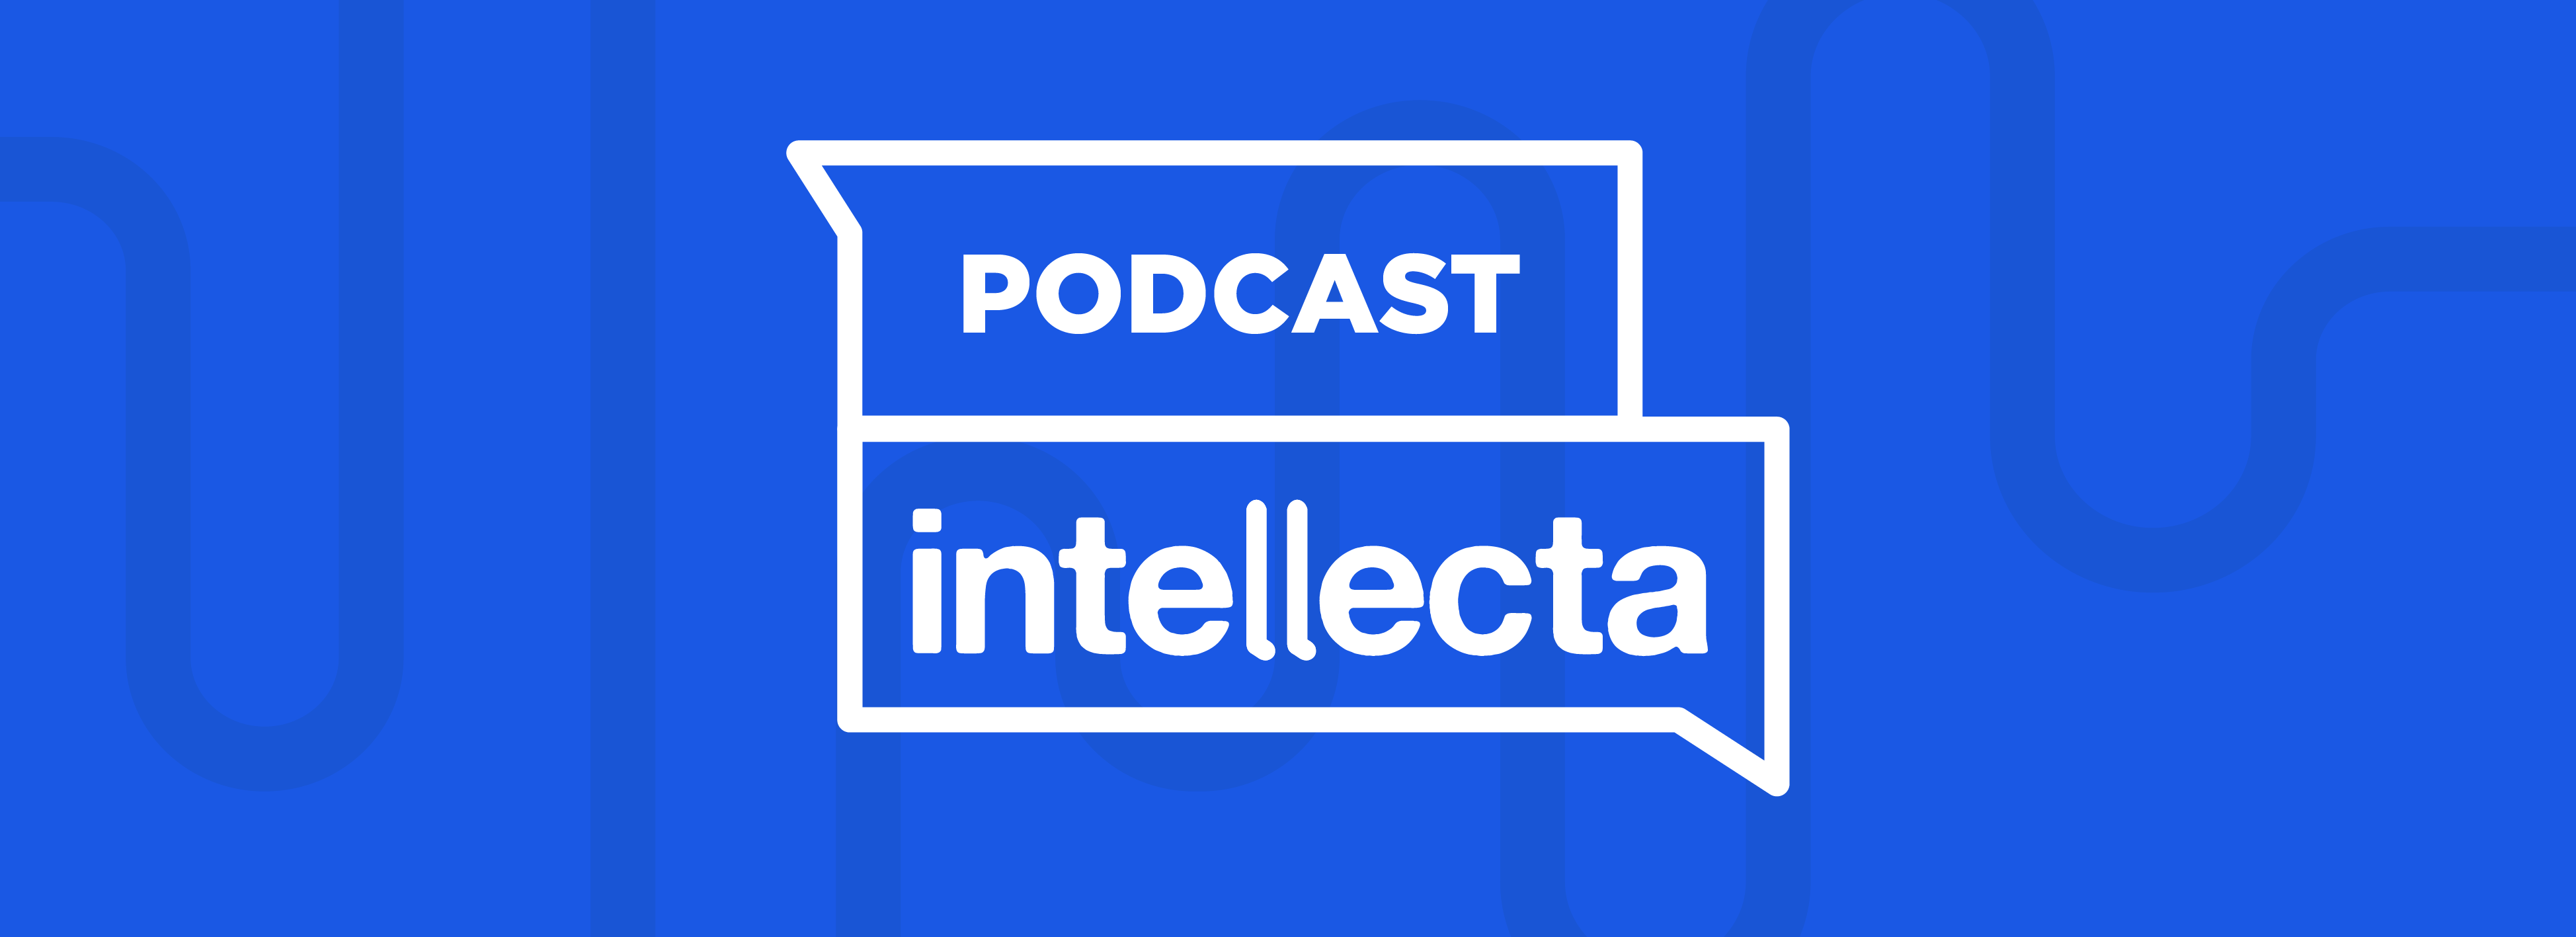 podcast-intellecta